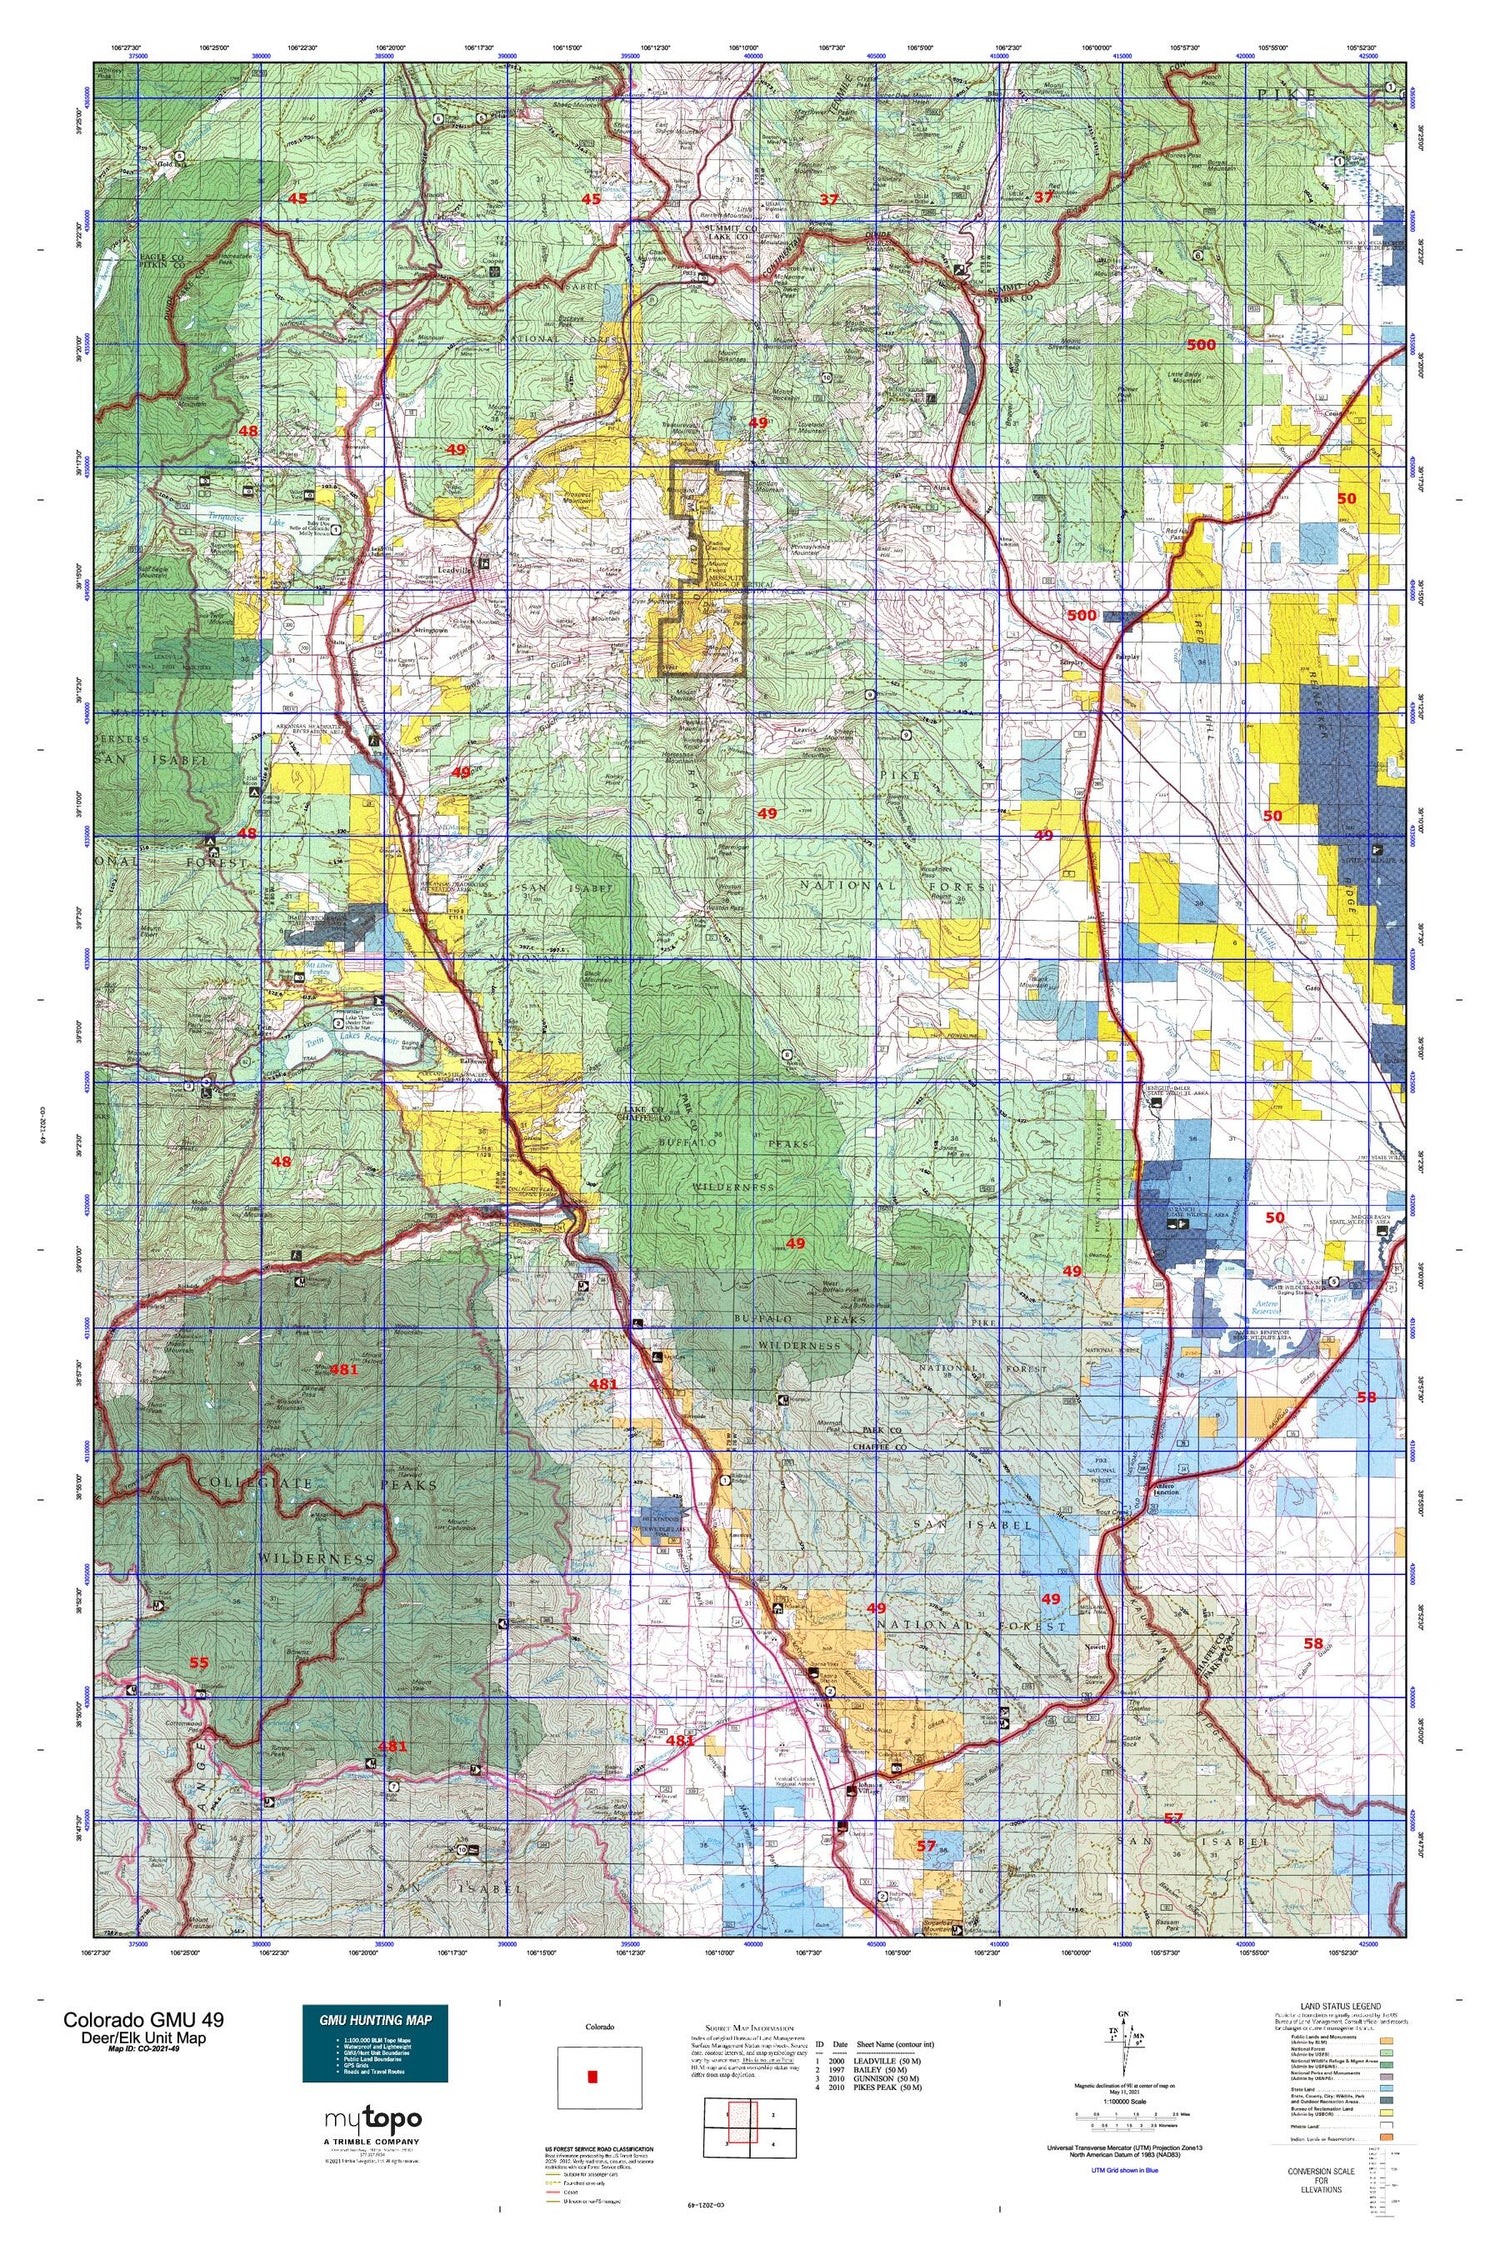 Colorado GMU 49 Map Image